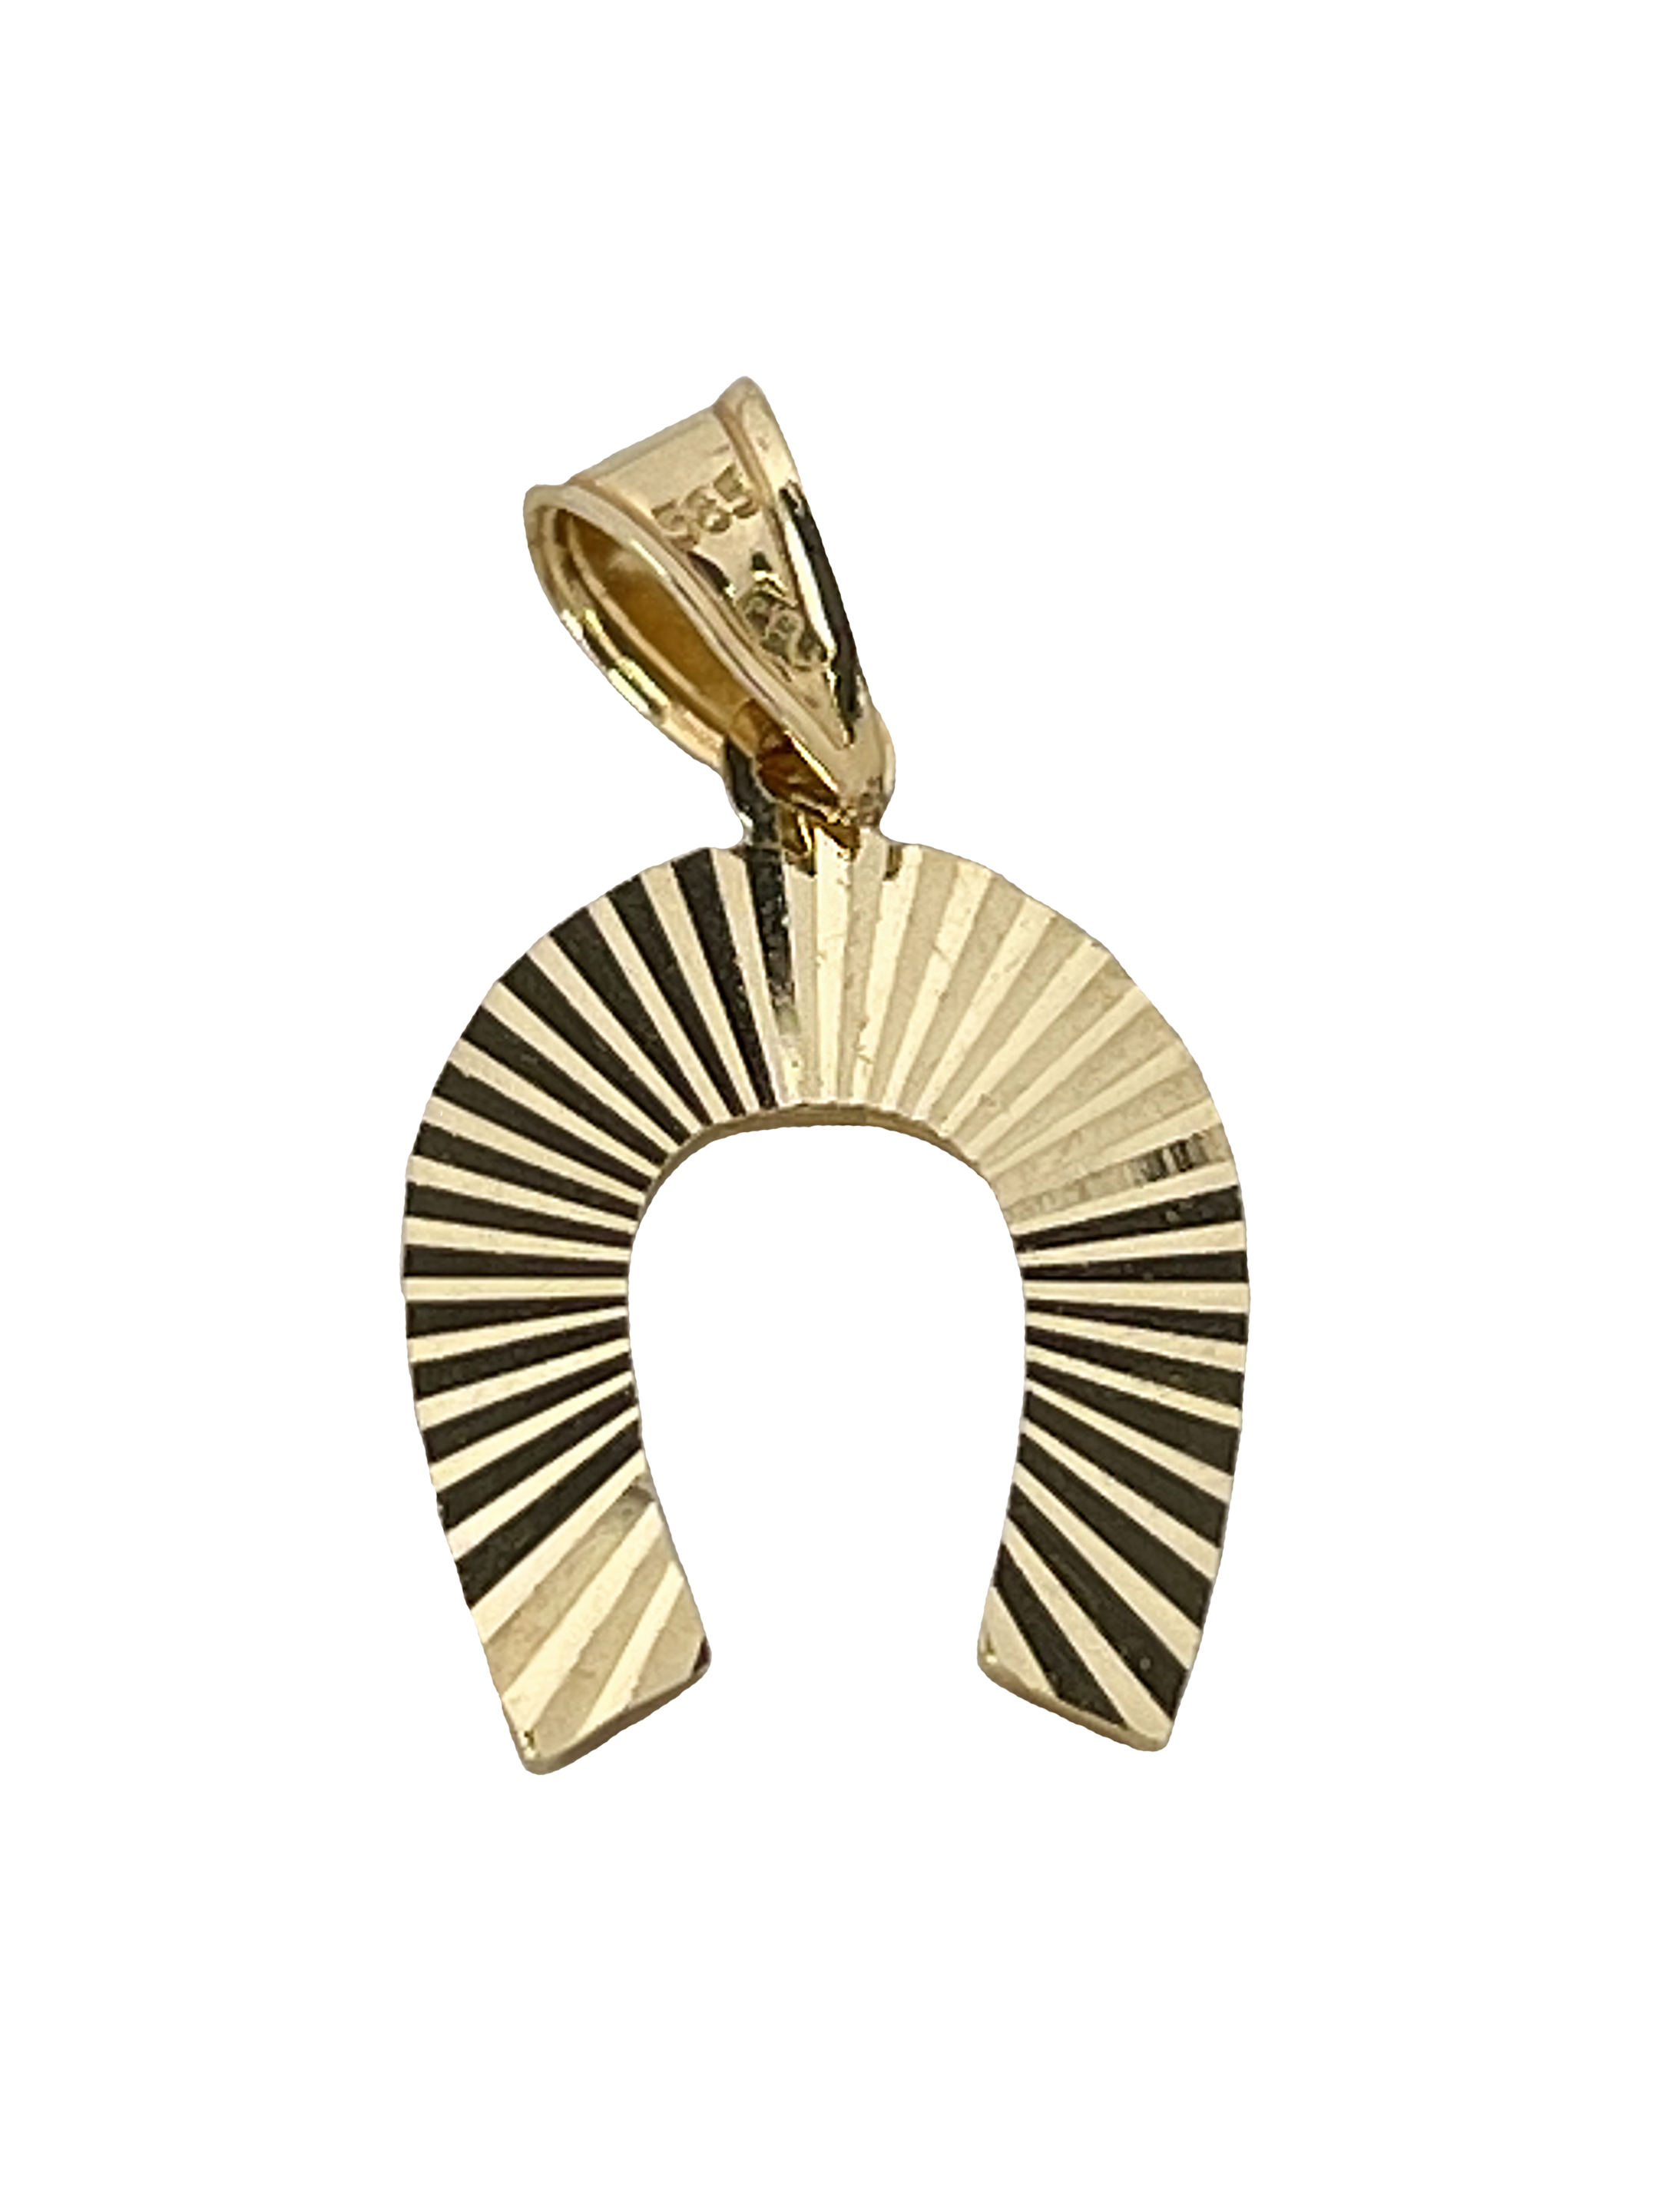 Golden horseshoe pendant made of yellow gold